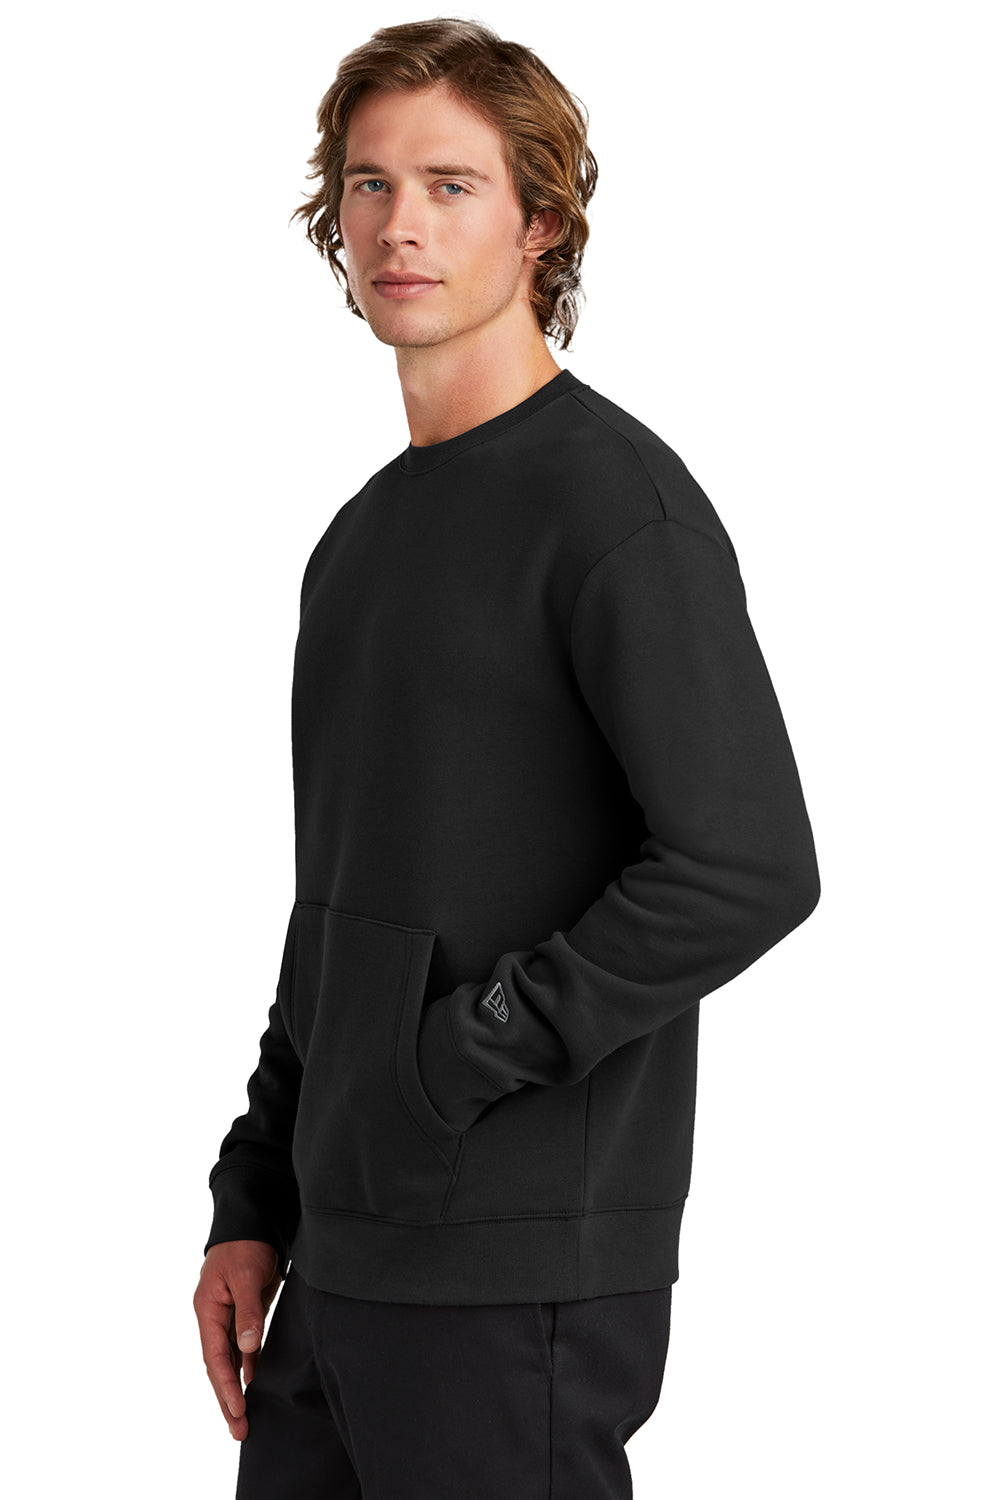 New Era NEA527 Mens Heritage Fleece Crewneck Sweatshirt w/ Pocket Black Side